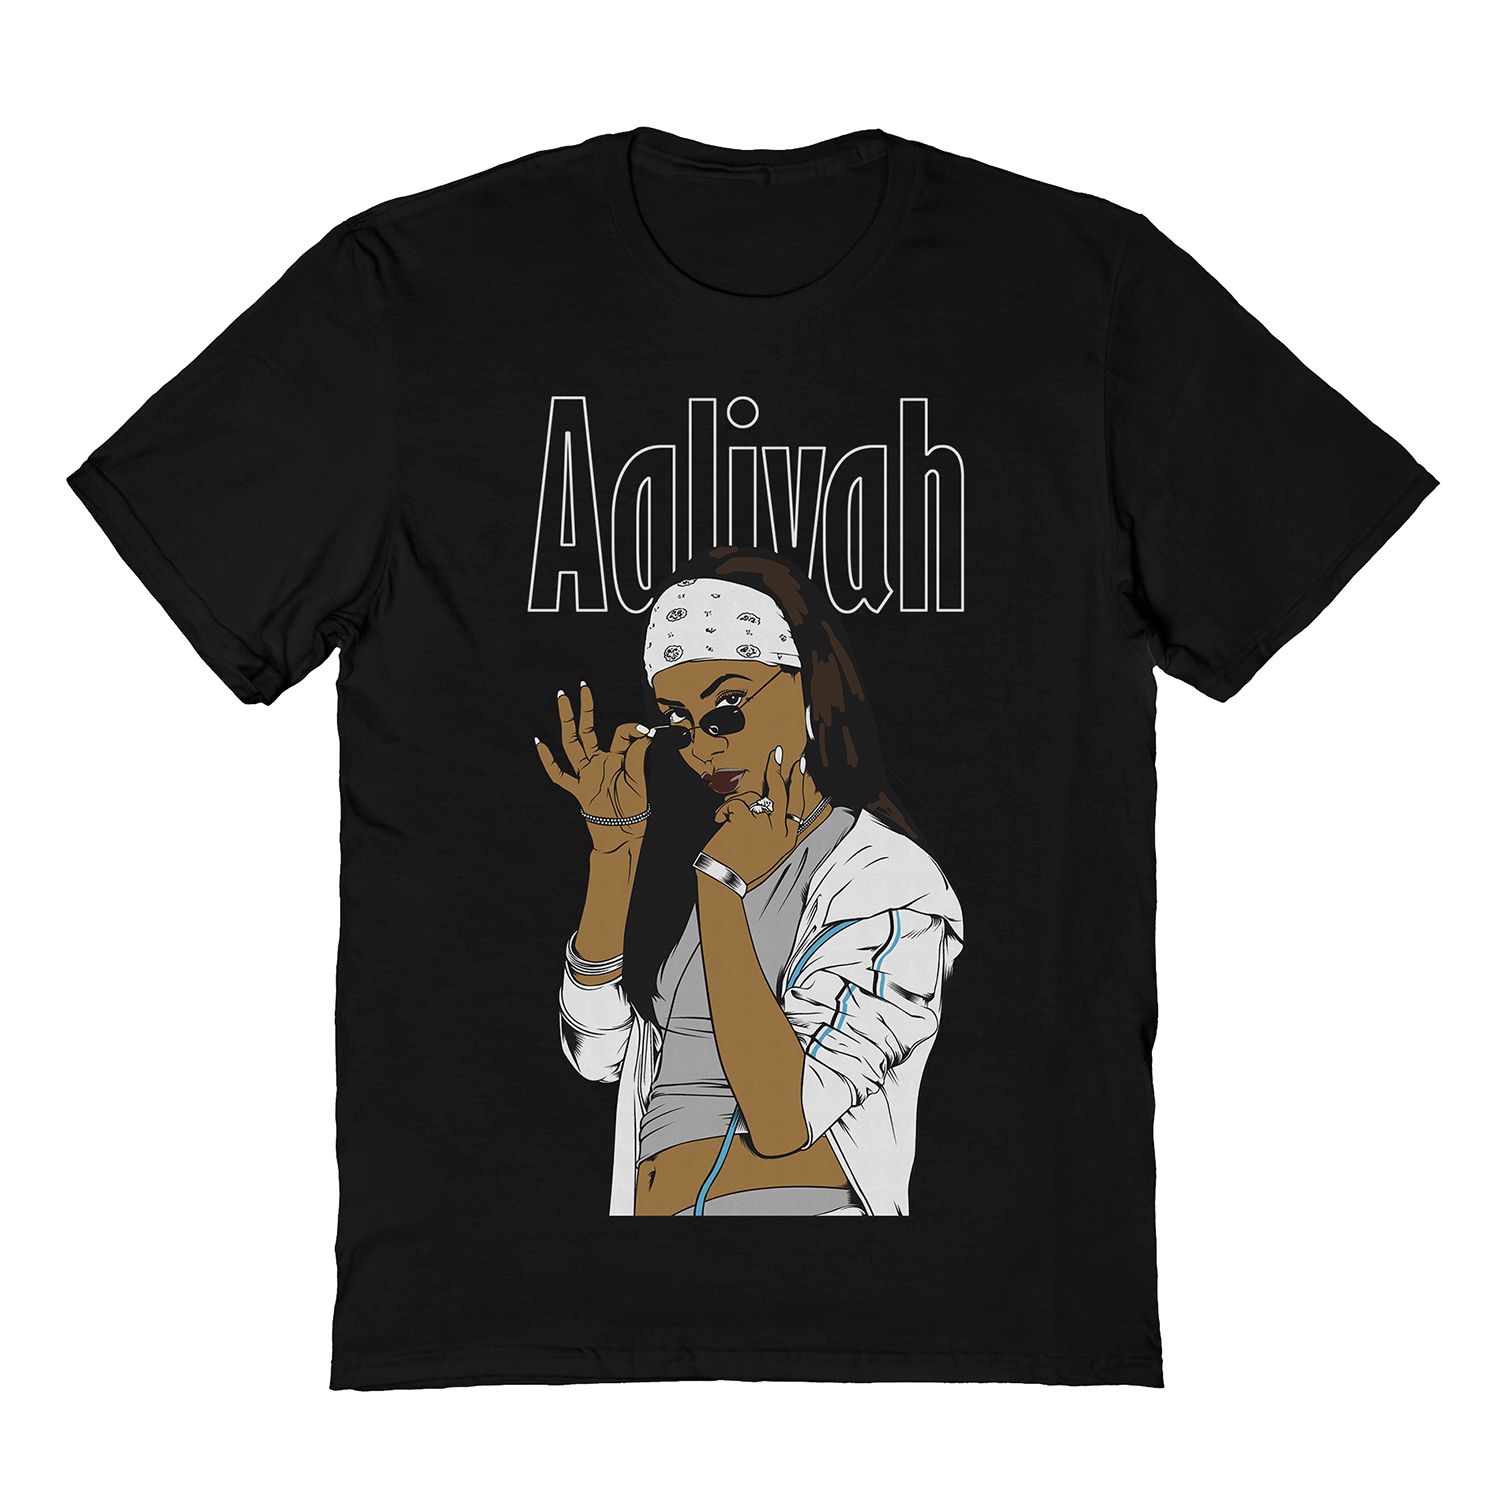 Мужская футболка с иллюстрацией Aaliyah Licensed Character